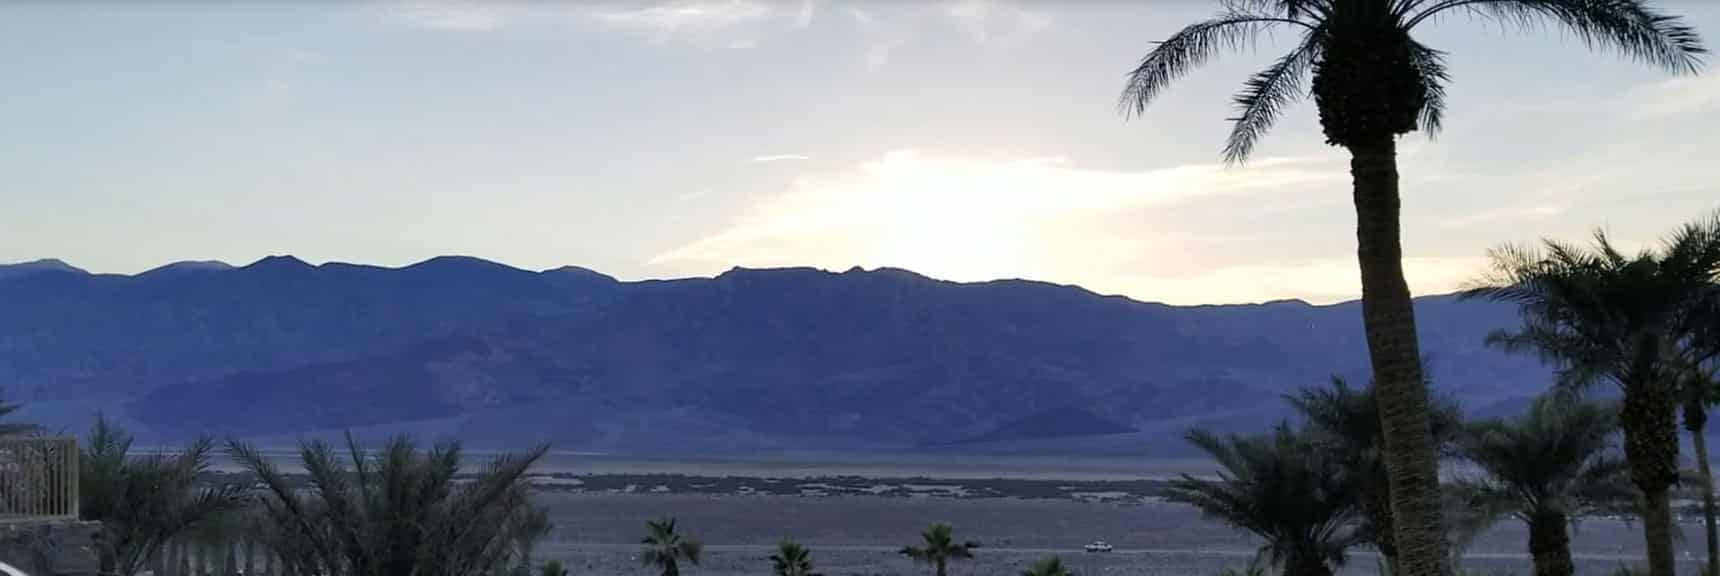 Sunset Over Death Valley National Park November 24th 2018